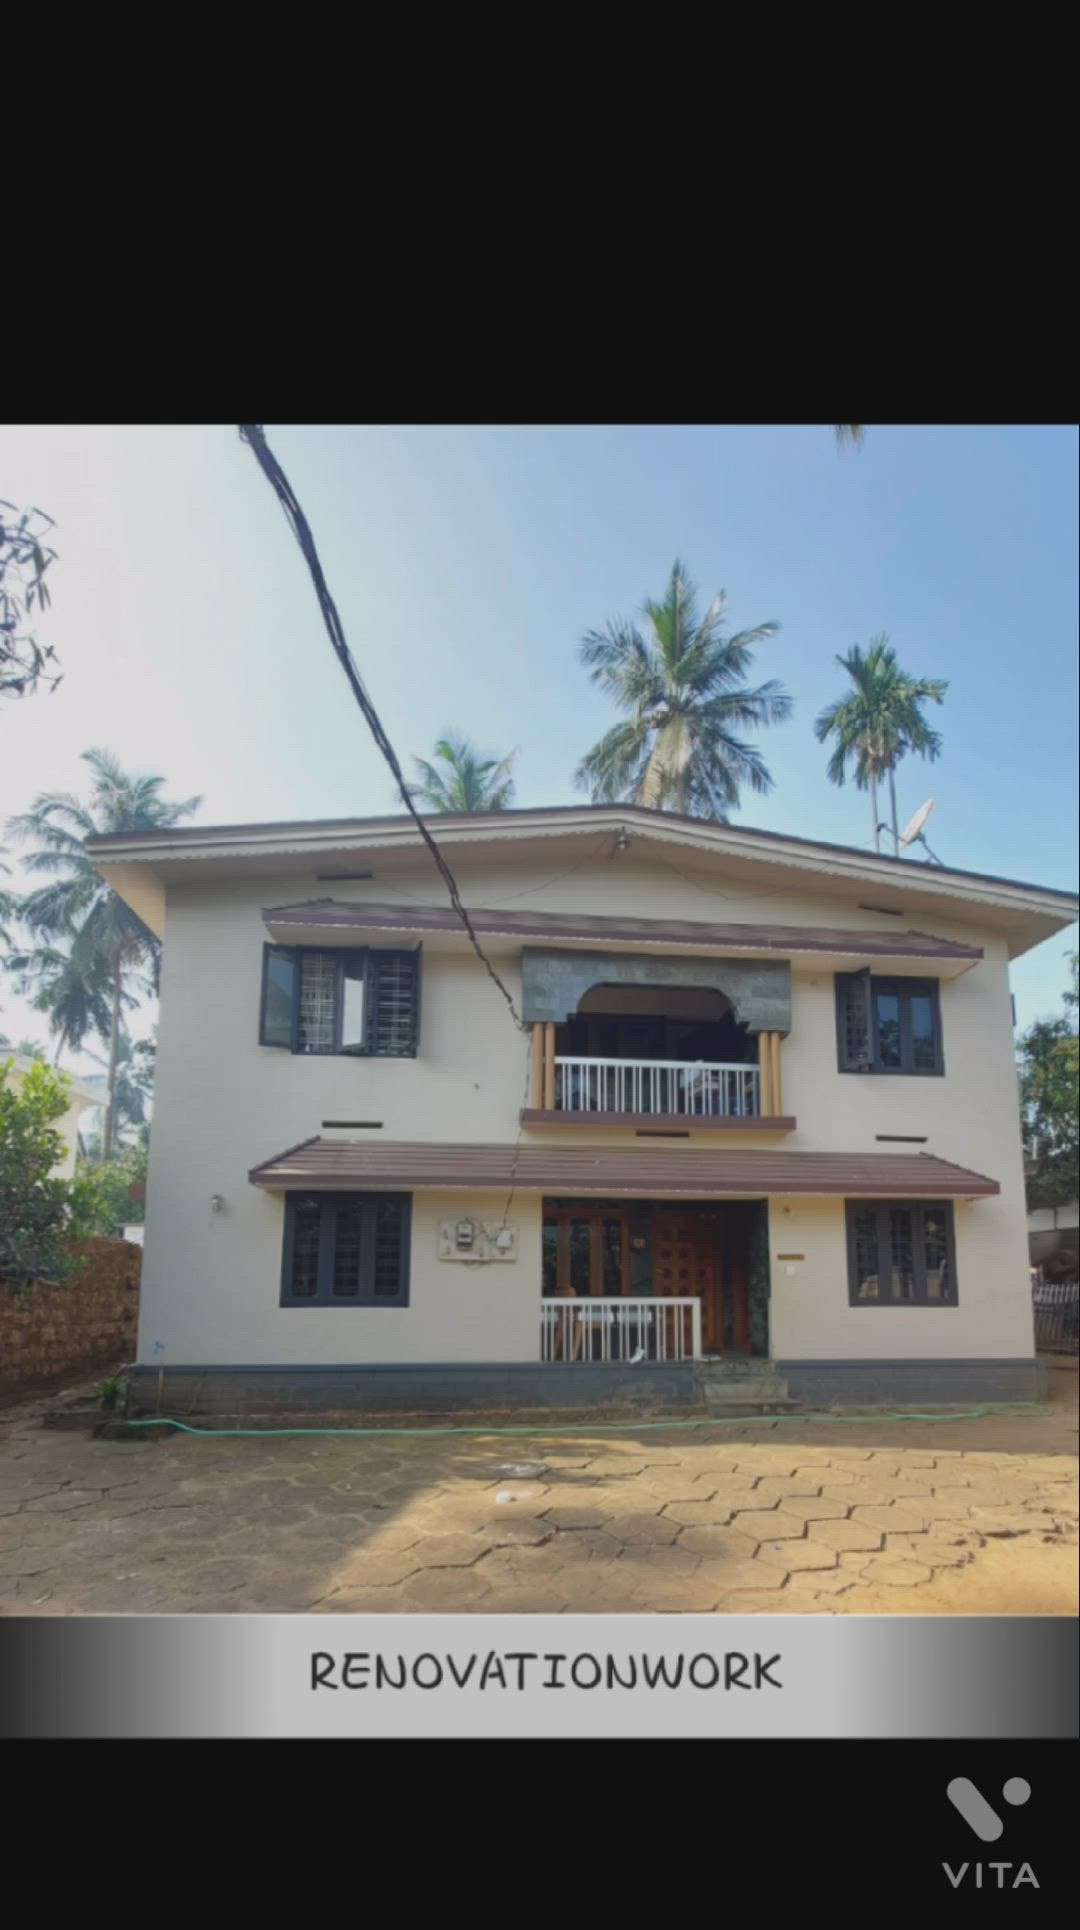 #Renovationwork #HouseDesigns #HouseRenovation #KeralaStyleHouse #Budgethome #Malappuram #Perinthalmanna